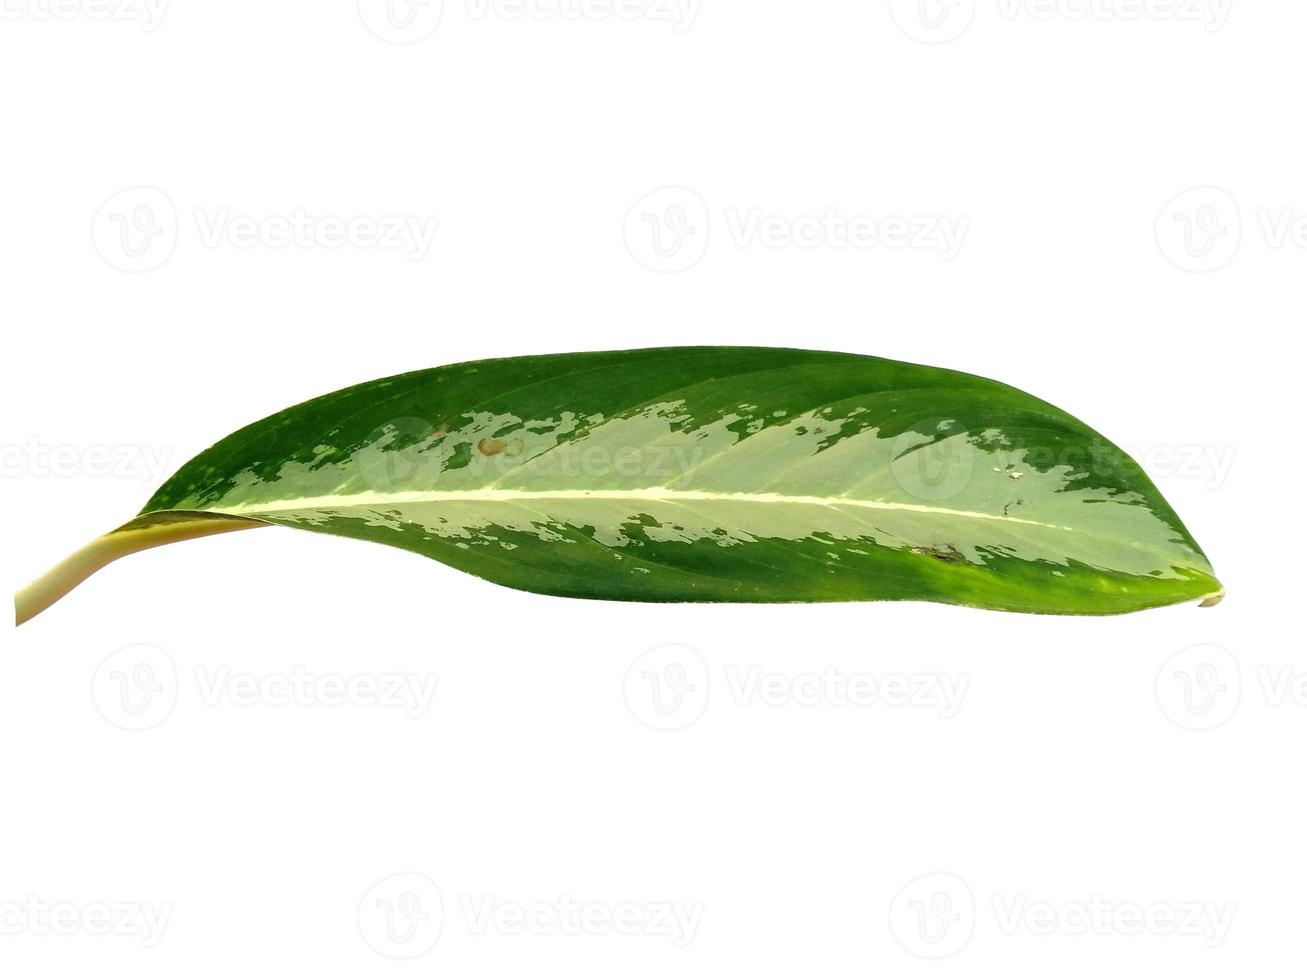 aglaonema commutatum blad isolerad på vit bakgrund foto